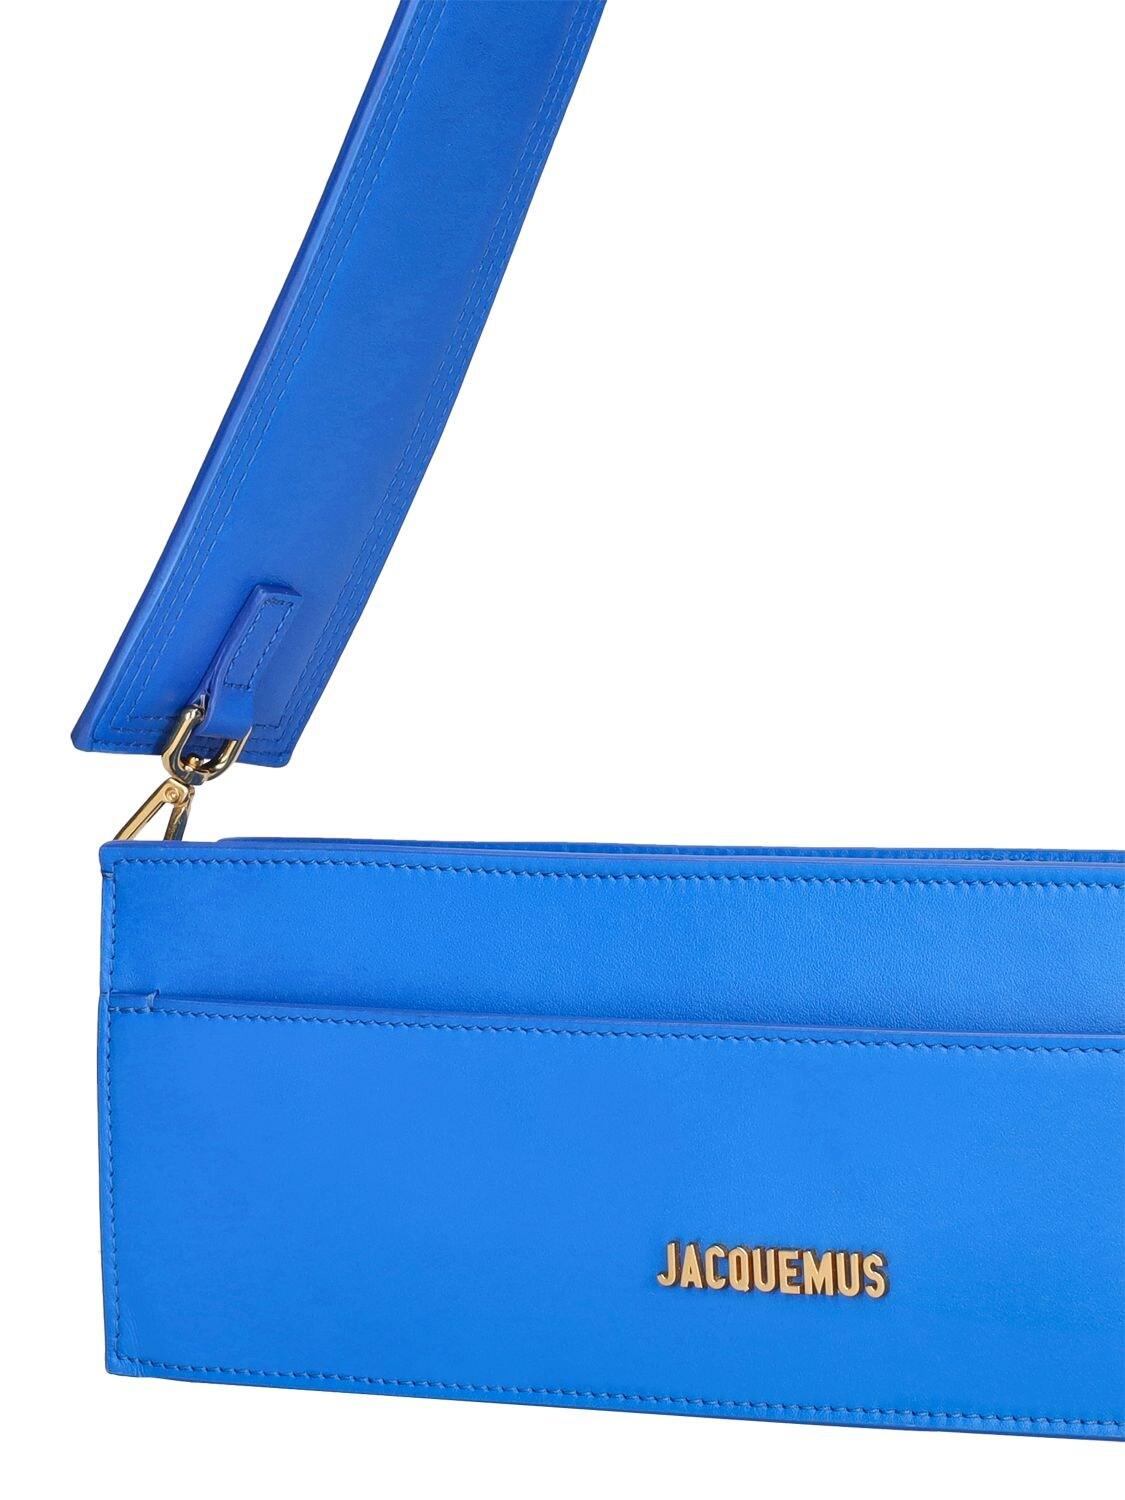 Jacquemus Le Ciuciu Leather Shoulder Bag in Blue | Lyst